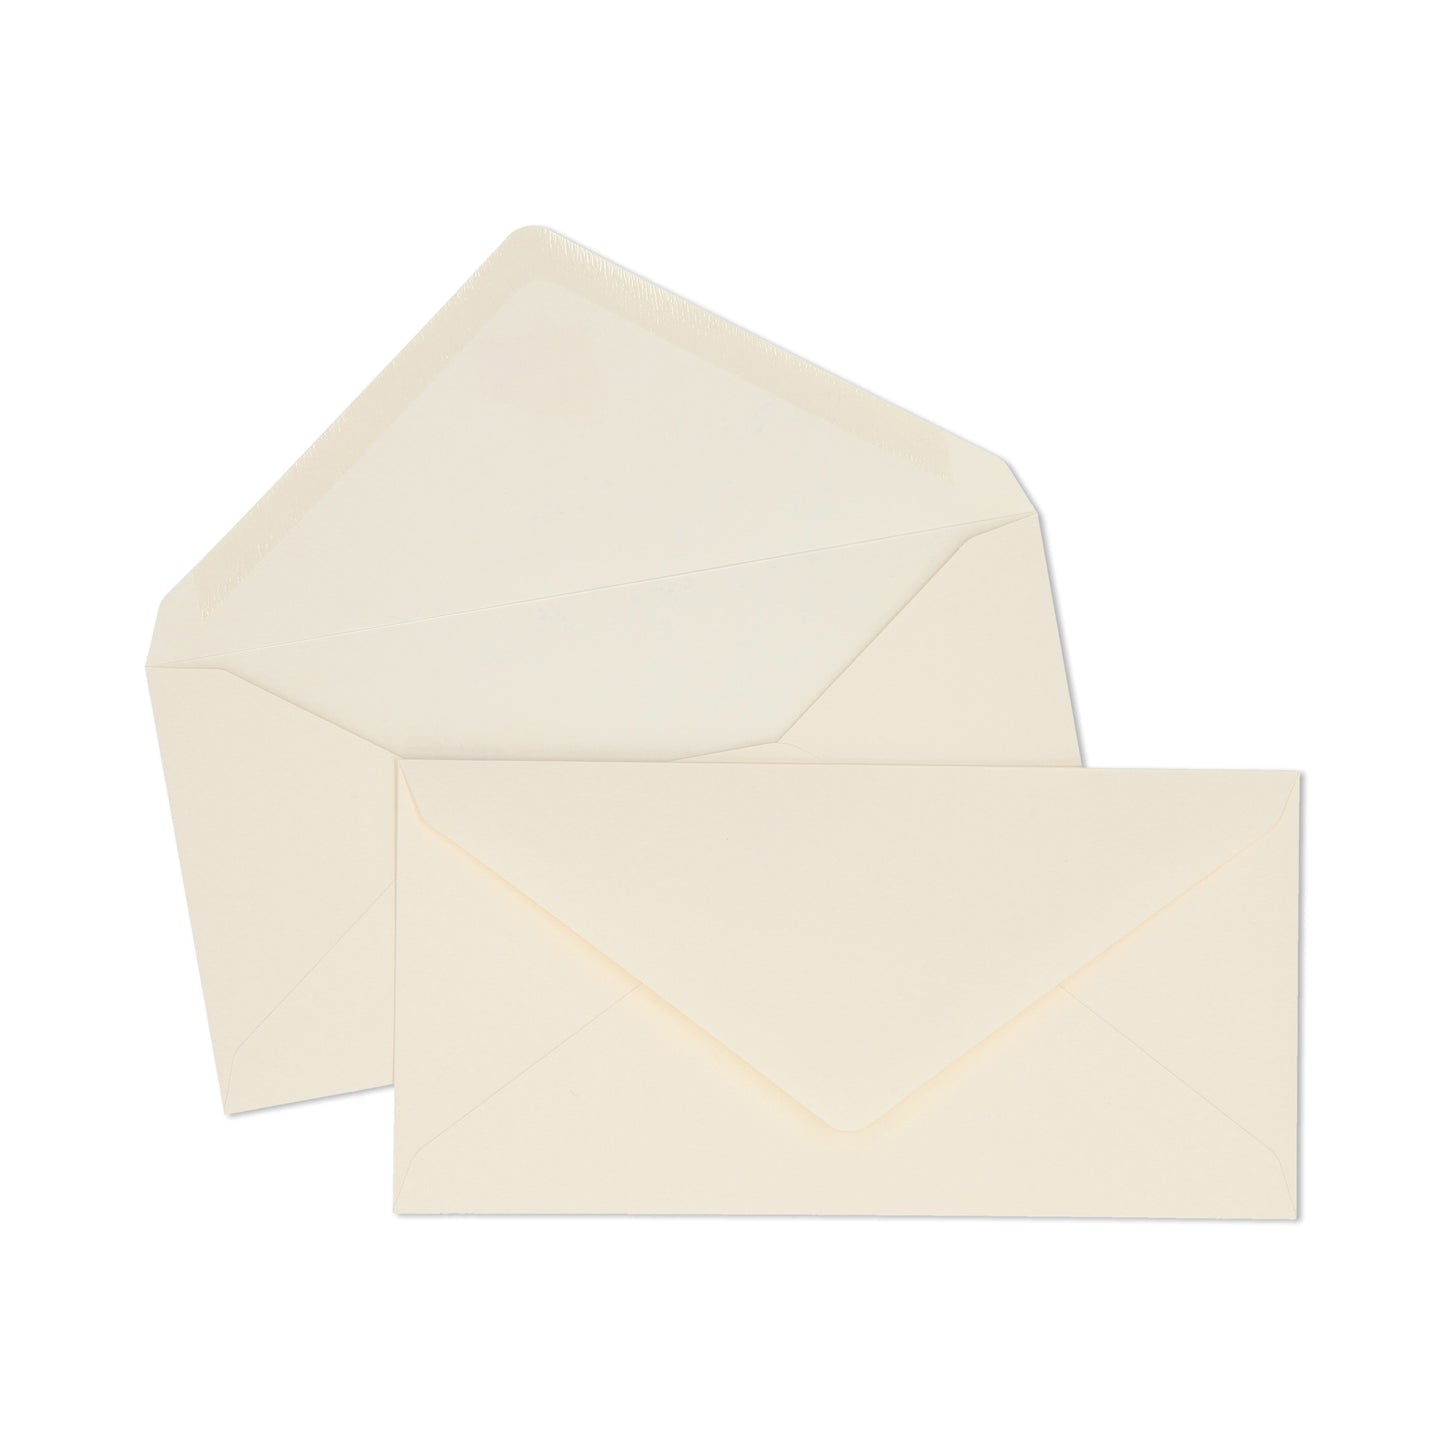 DL Ivory Envelope - 10 units